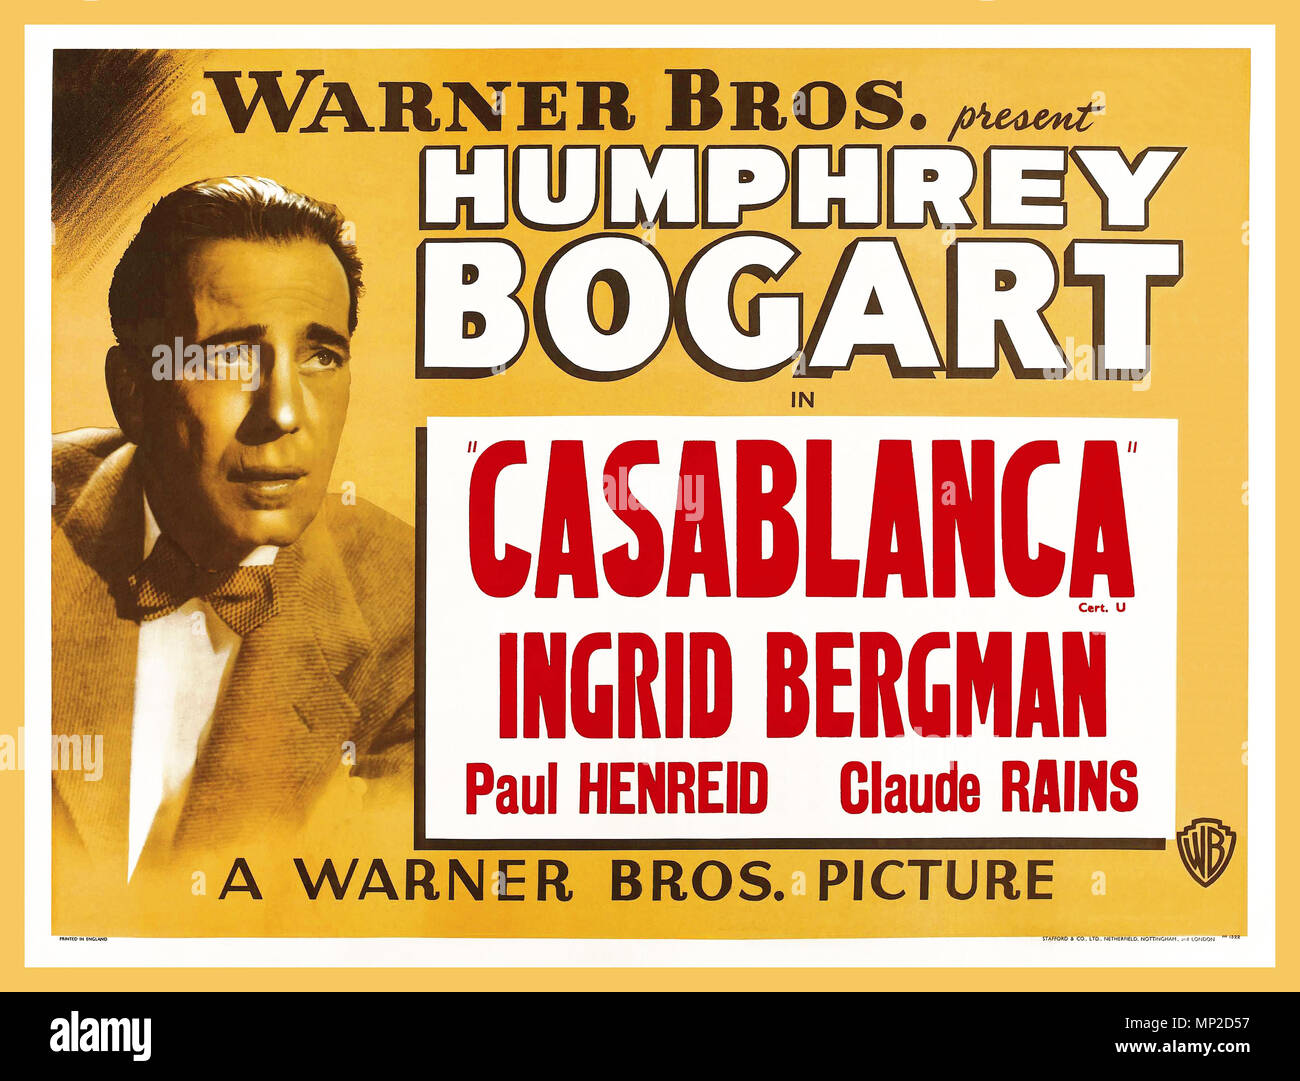 1940's Vintage Film Movie Poster Casablanca a 1942 American romantic drama  film directed by Michael Curtiz. The film stars Humphrey Bogart, Ingrid  Bergman, and Paul Henreid; it also features Claude Rains, Conrad